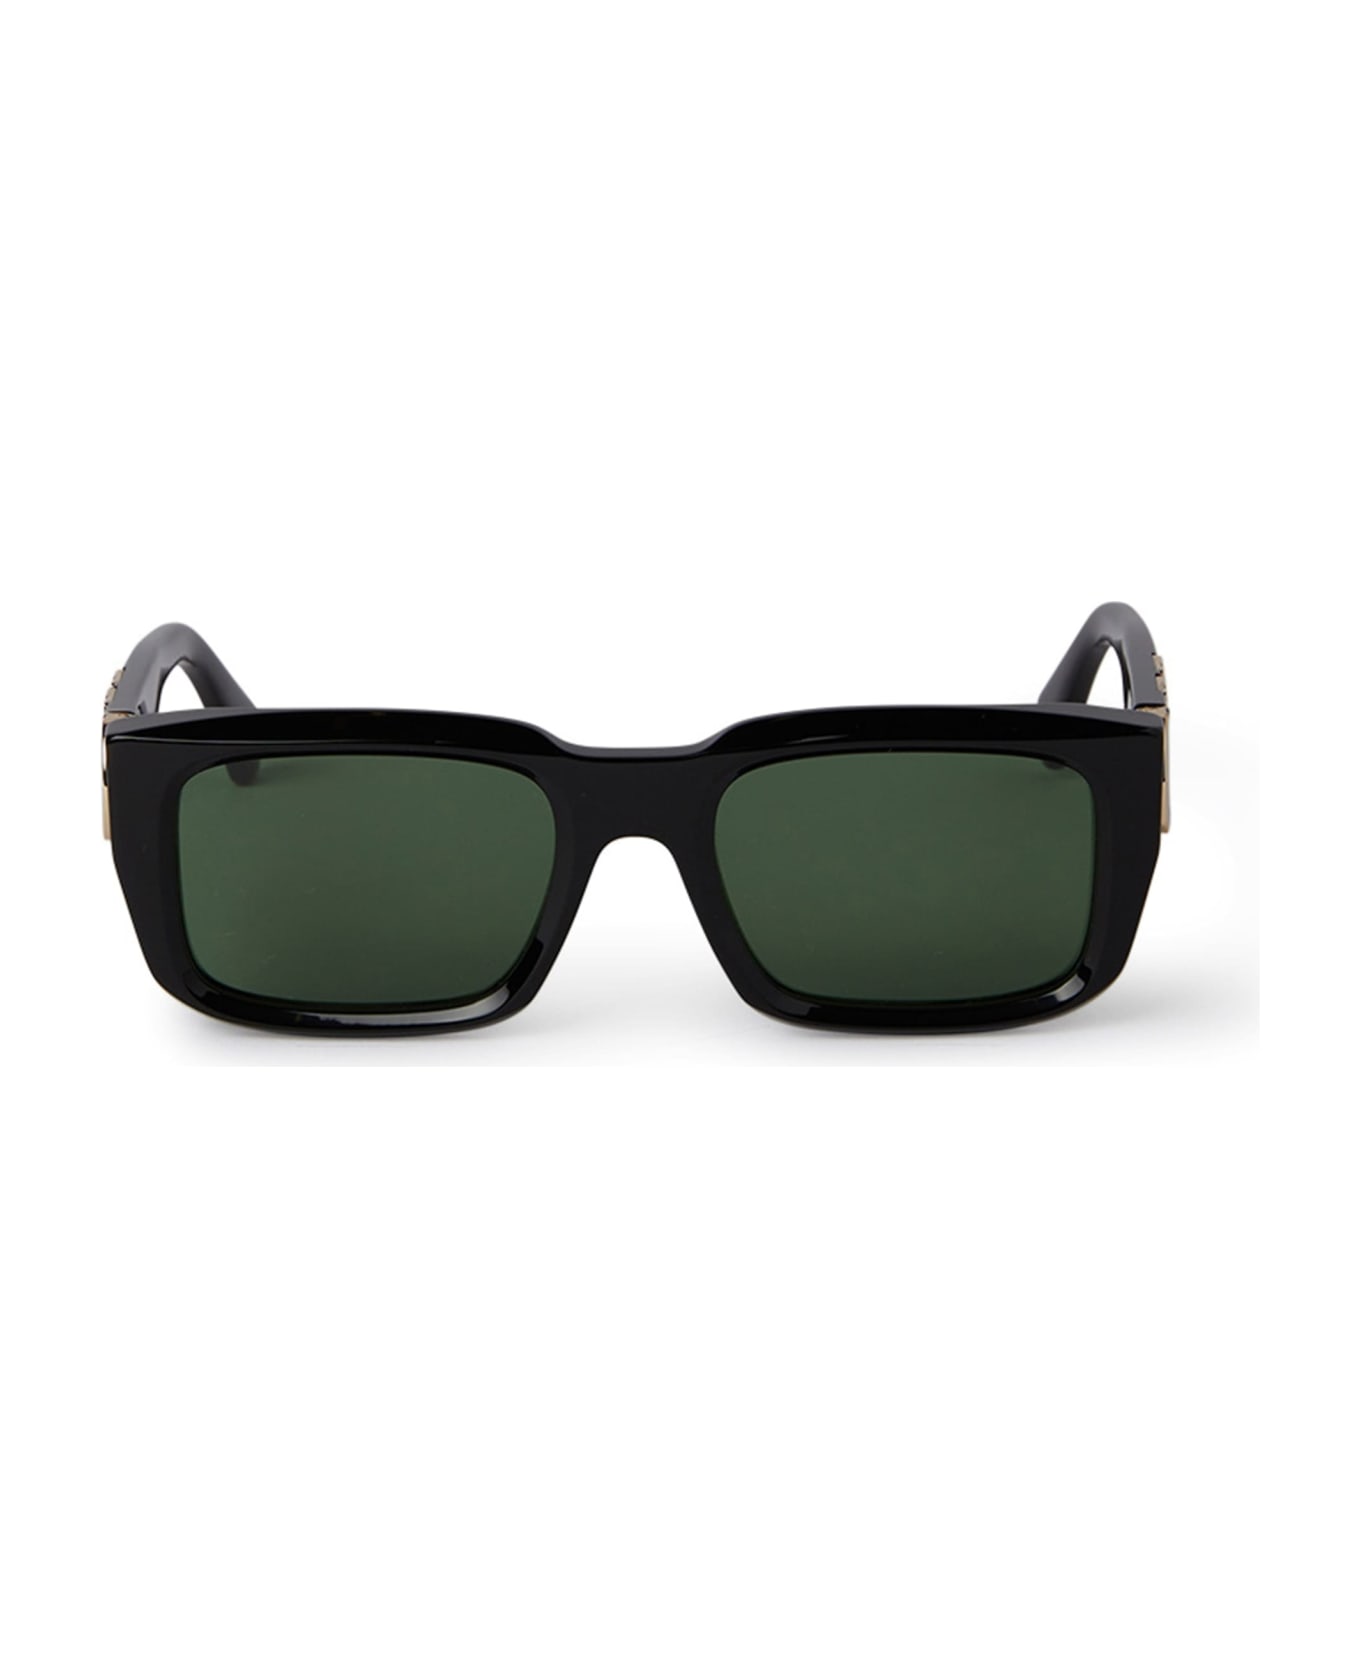 Off-White Hays - Black / Green Sunglasses - Black